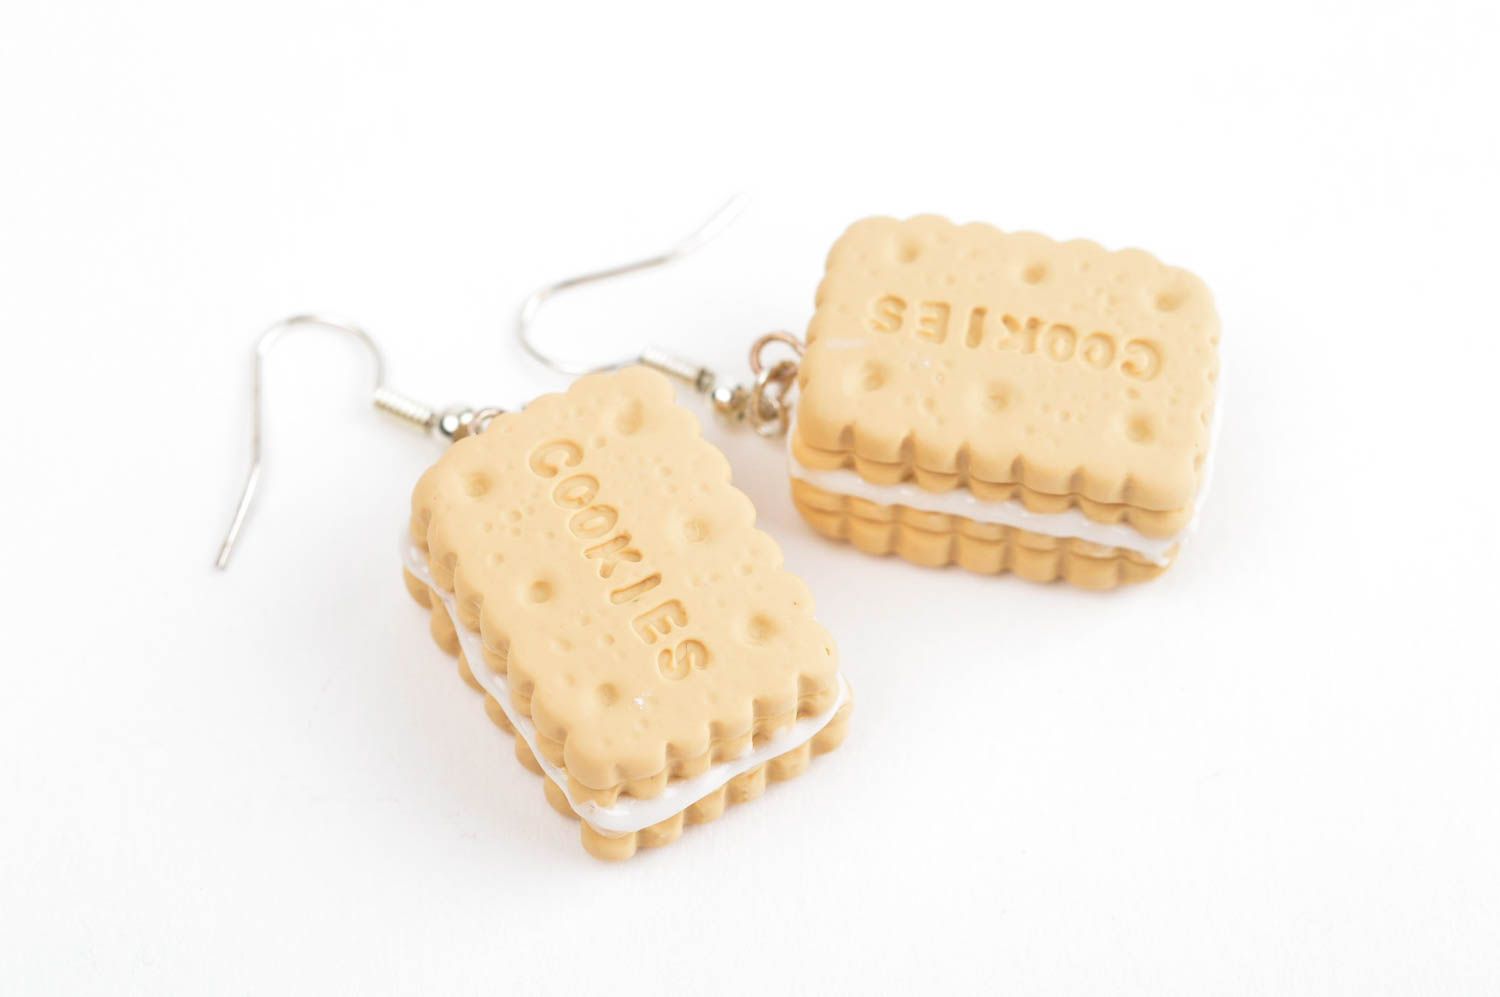 Handmade clay earrings designer accessories gift ideas unusual jewelry photo 3